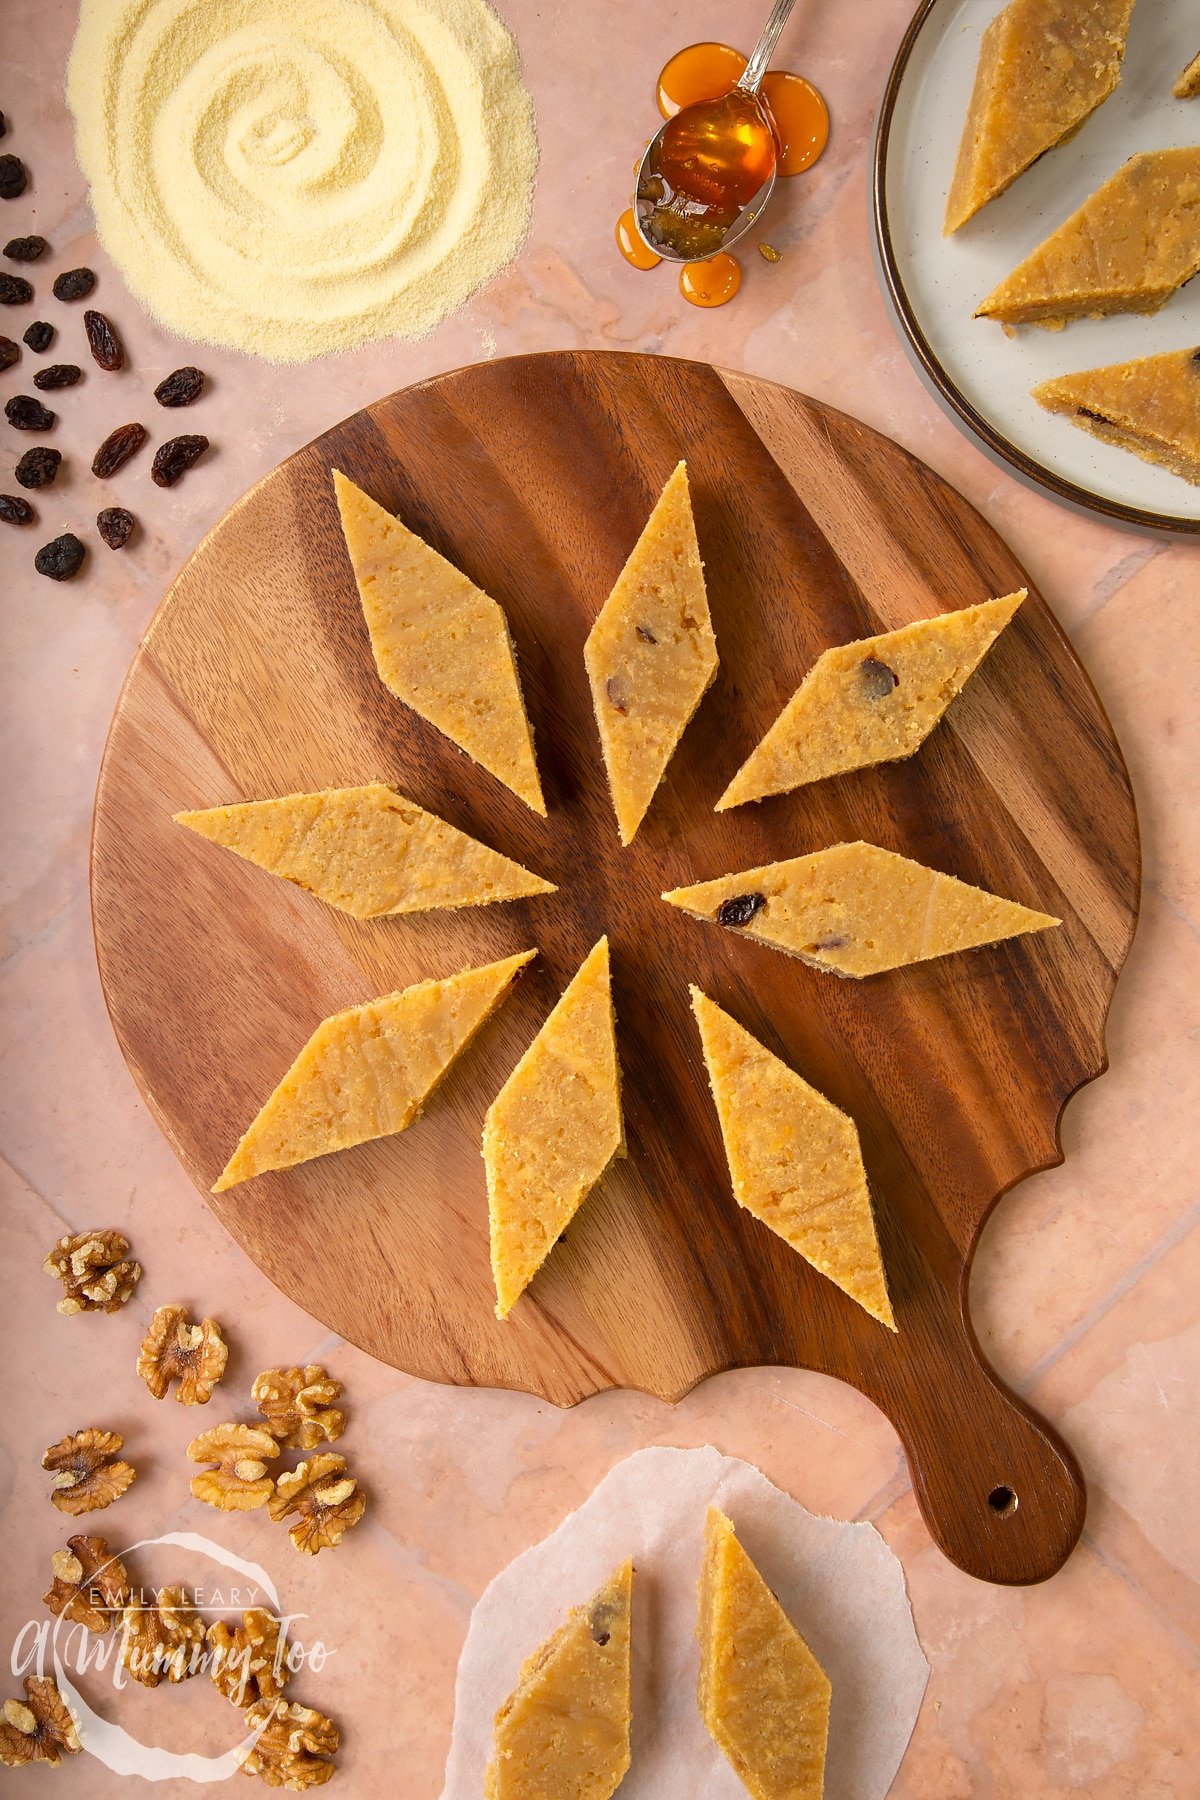 Sanwin-makin (golden semolina cake) on a wooden board. Ingredients surround the board.